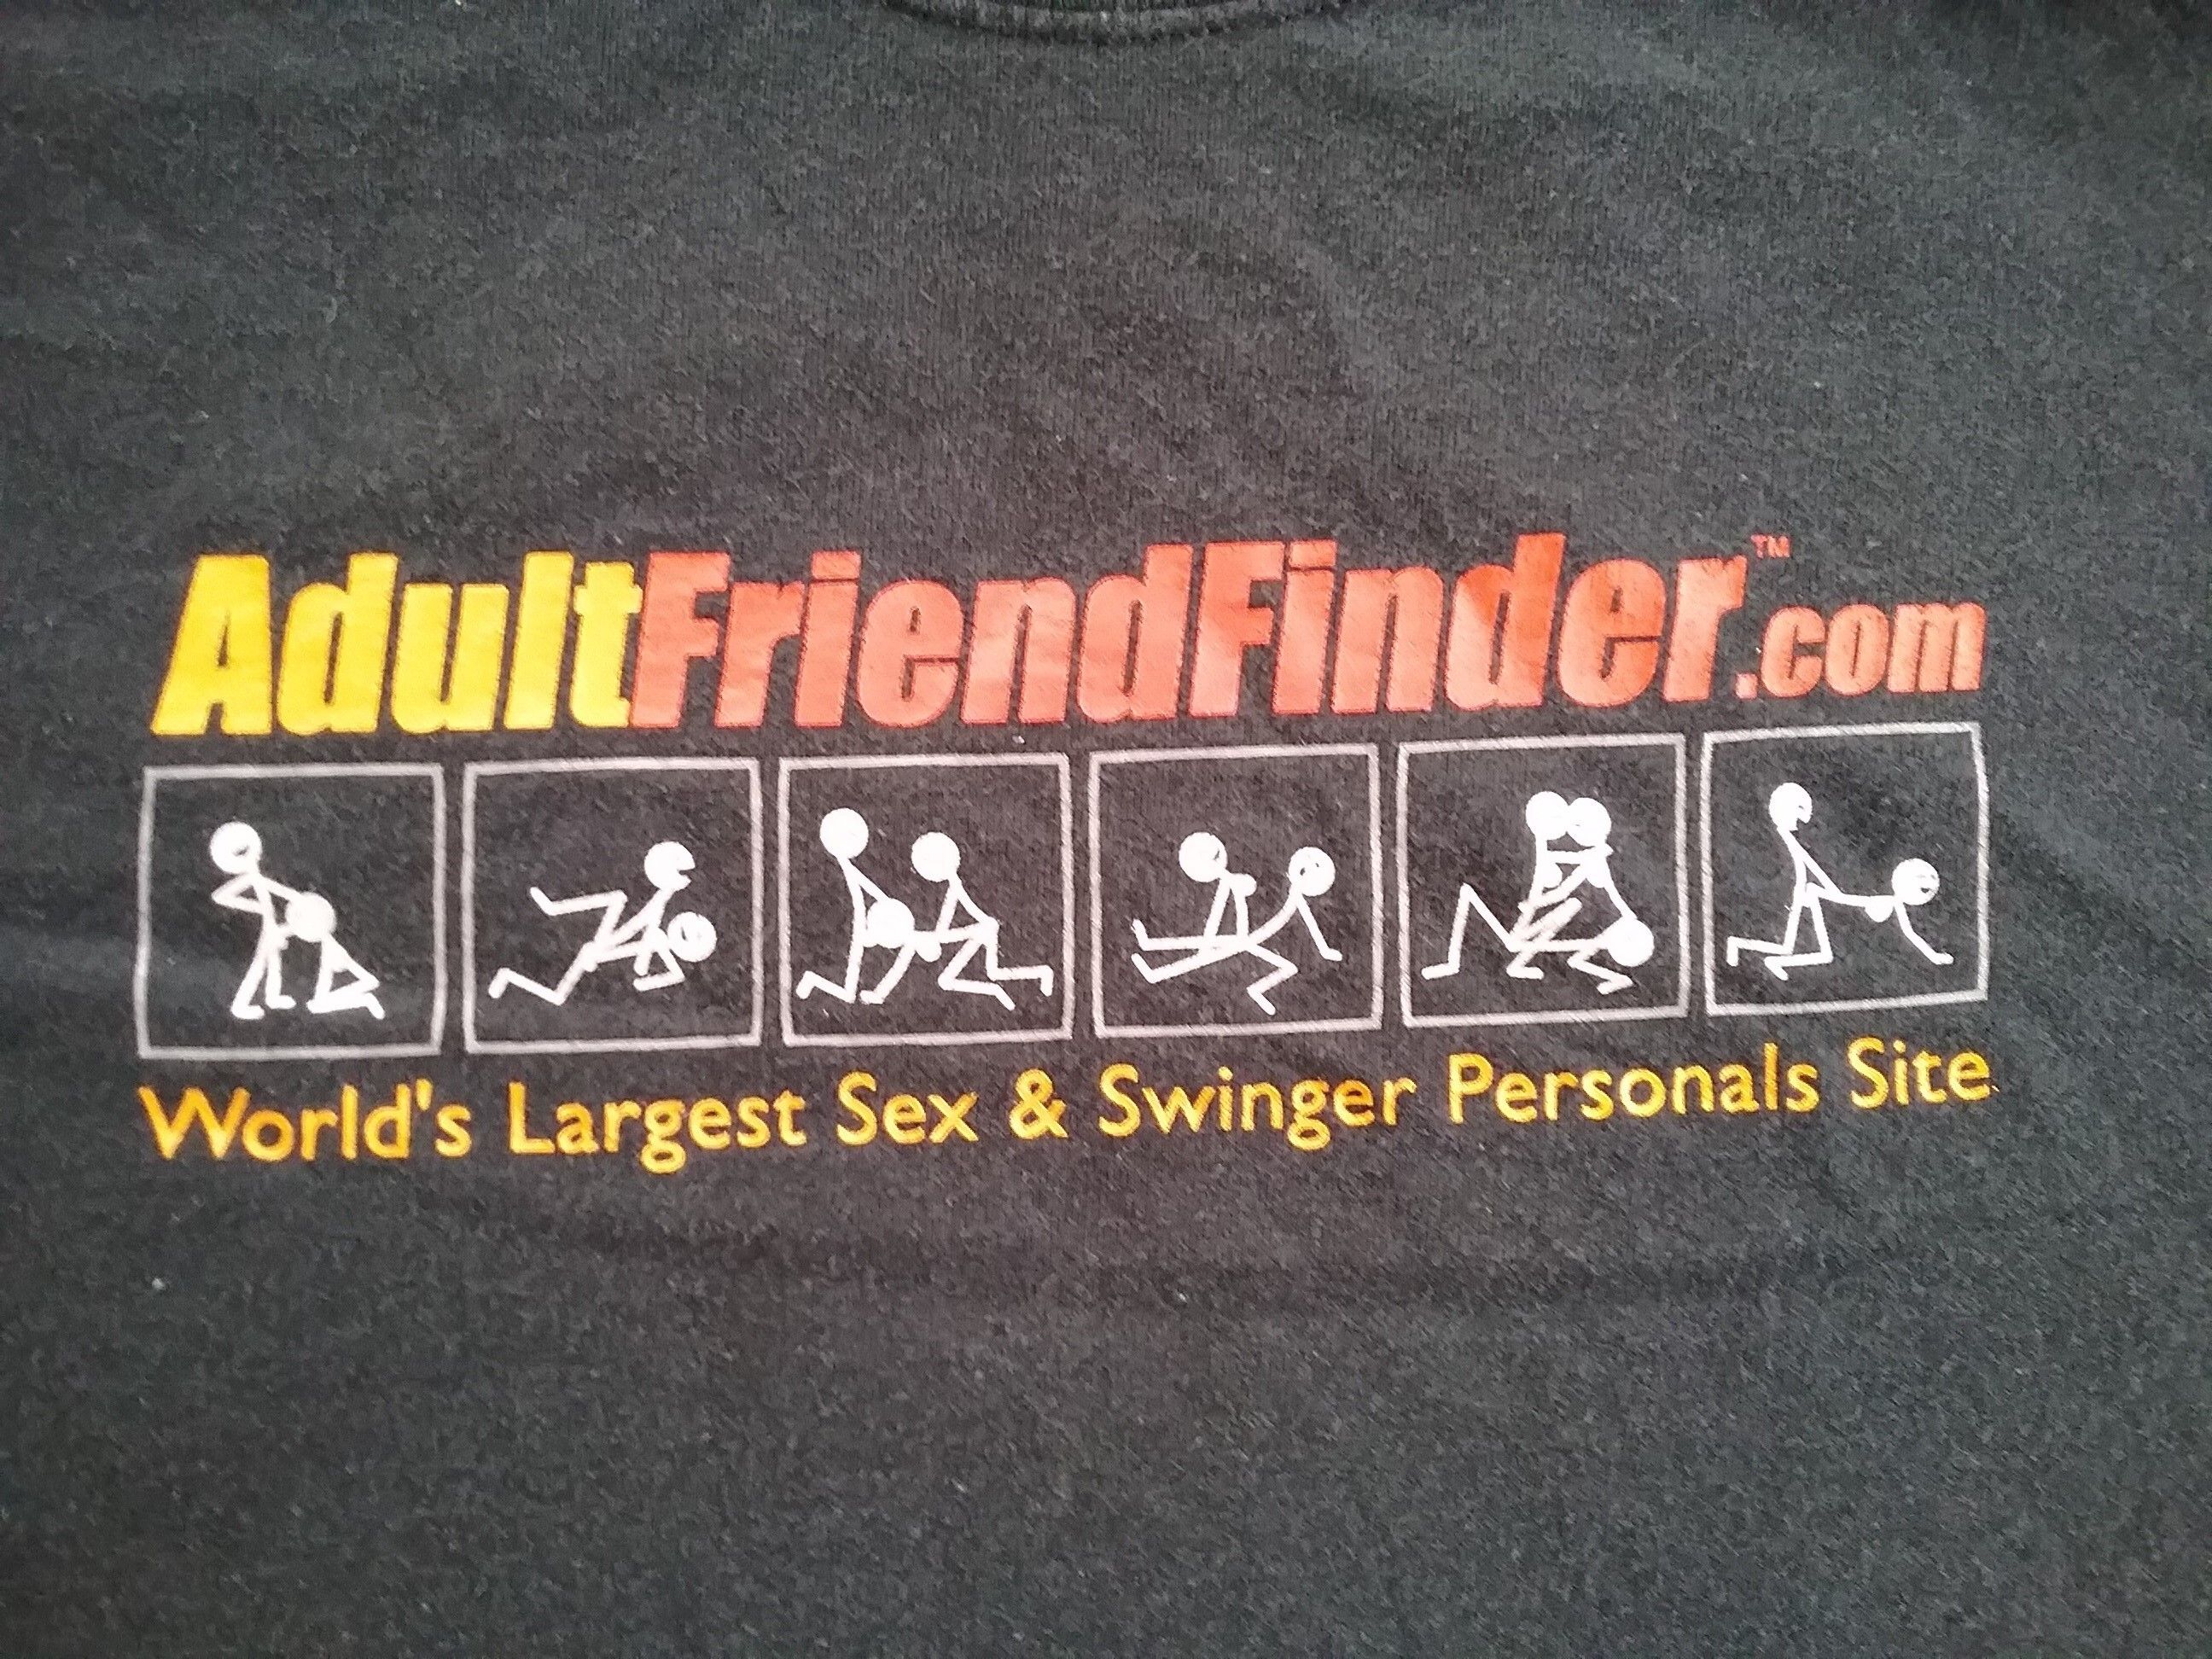 Custom Adult Friend Finder